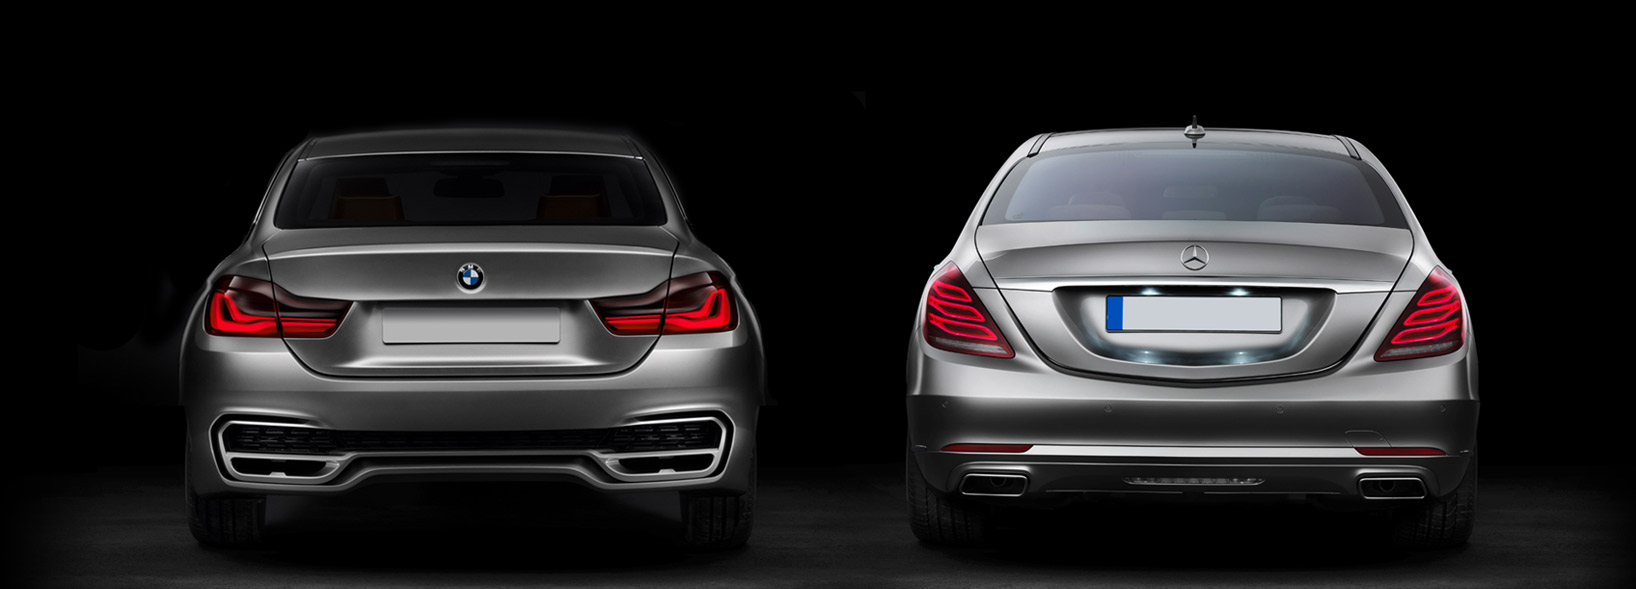 Quality Tuning BMW & Mercedes back